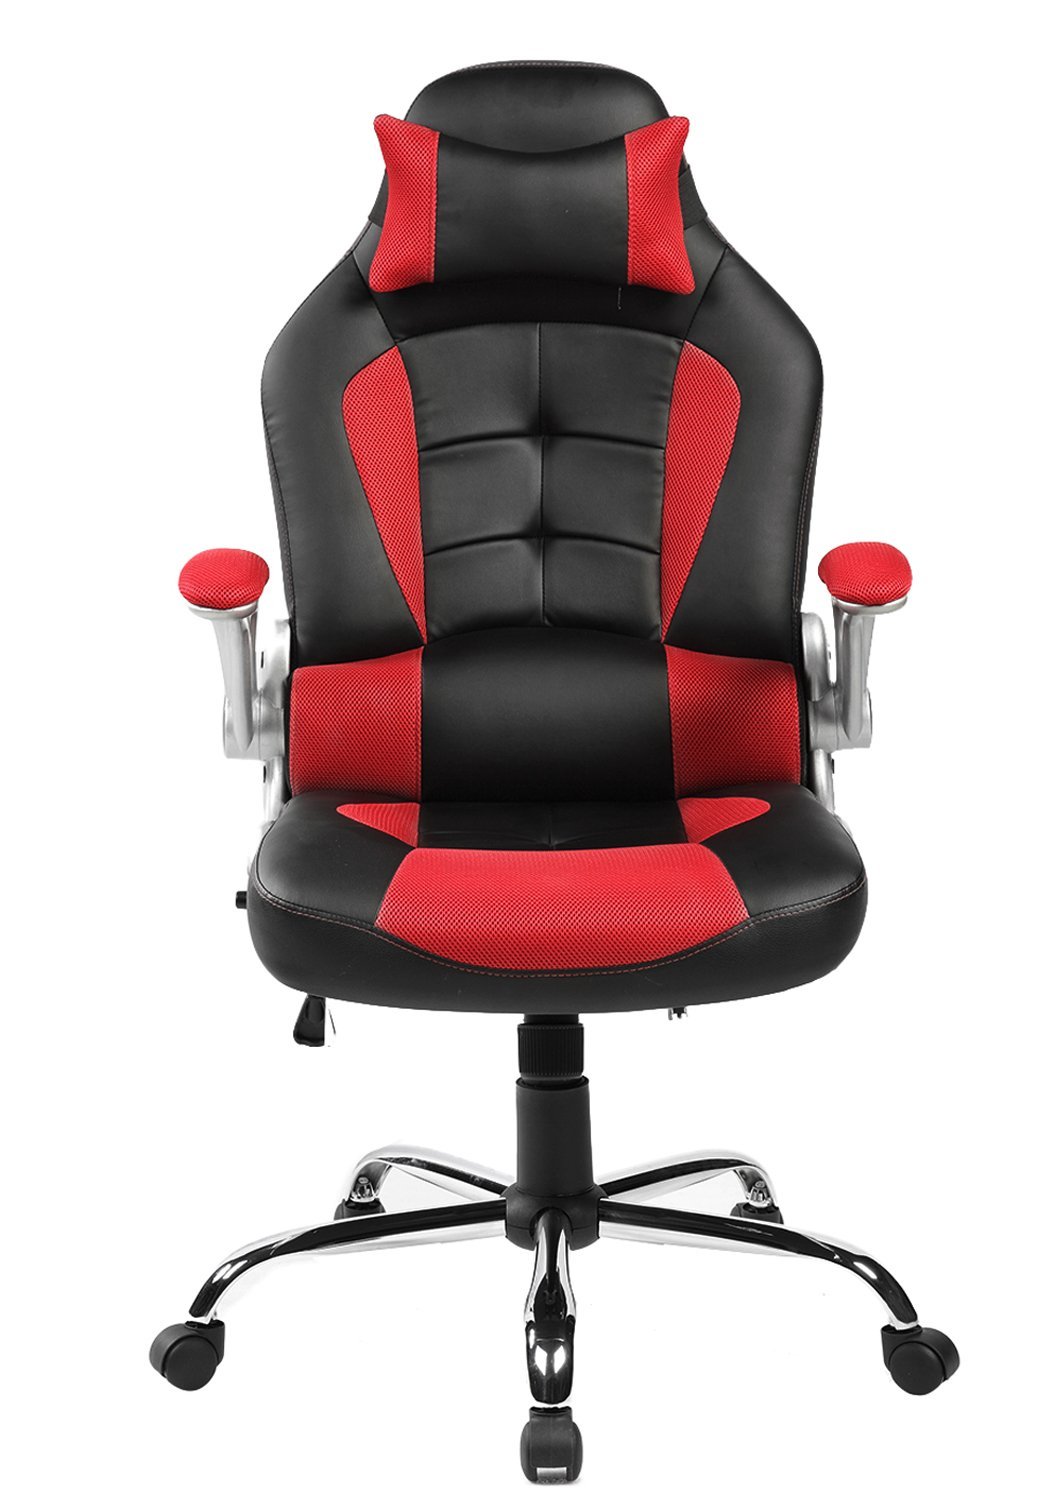 computer chairs amazon.com: merax king series high-back ergonomic pu leather office chair VFUUFXP